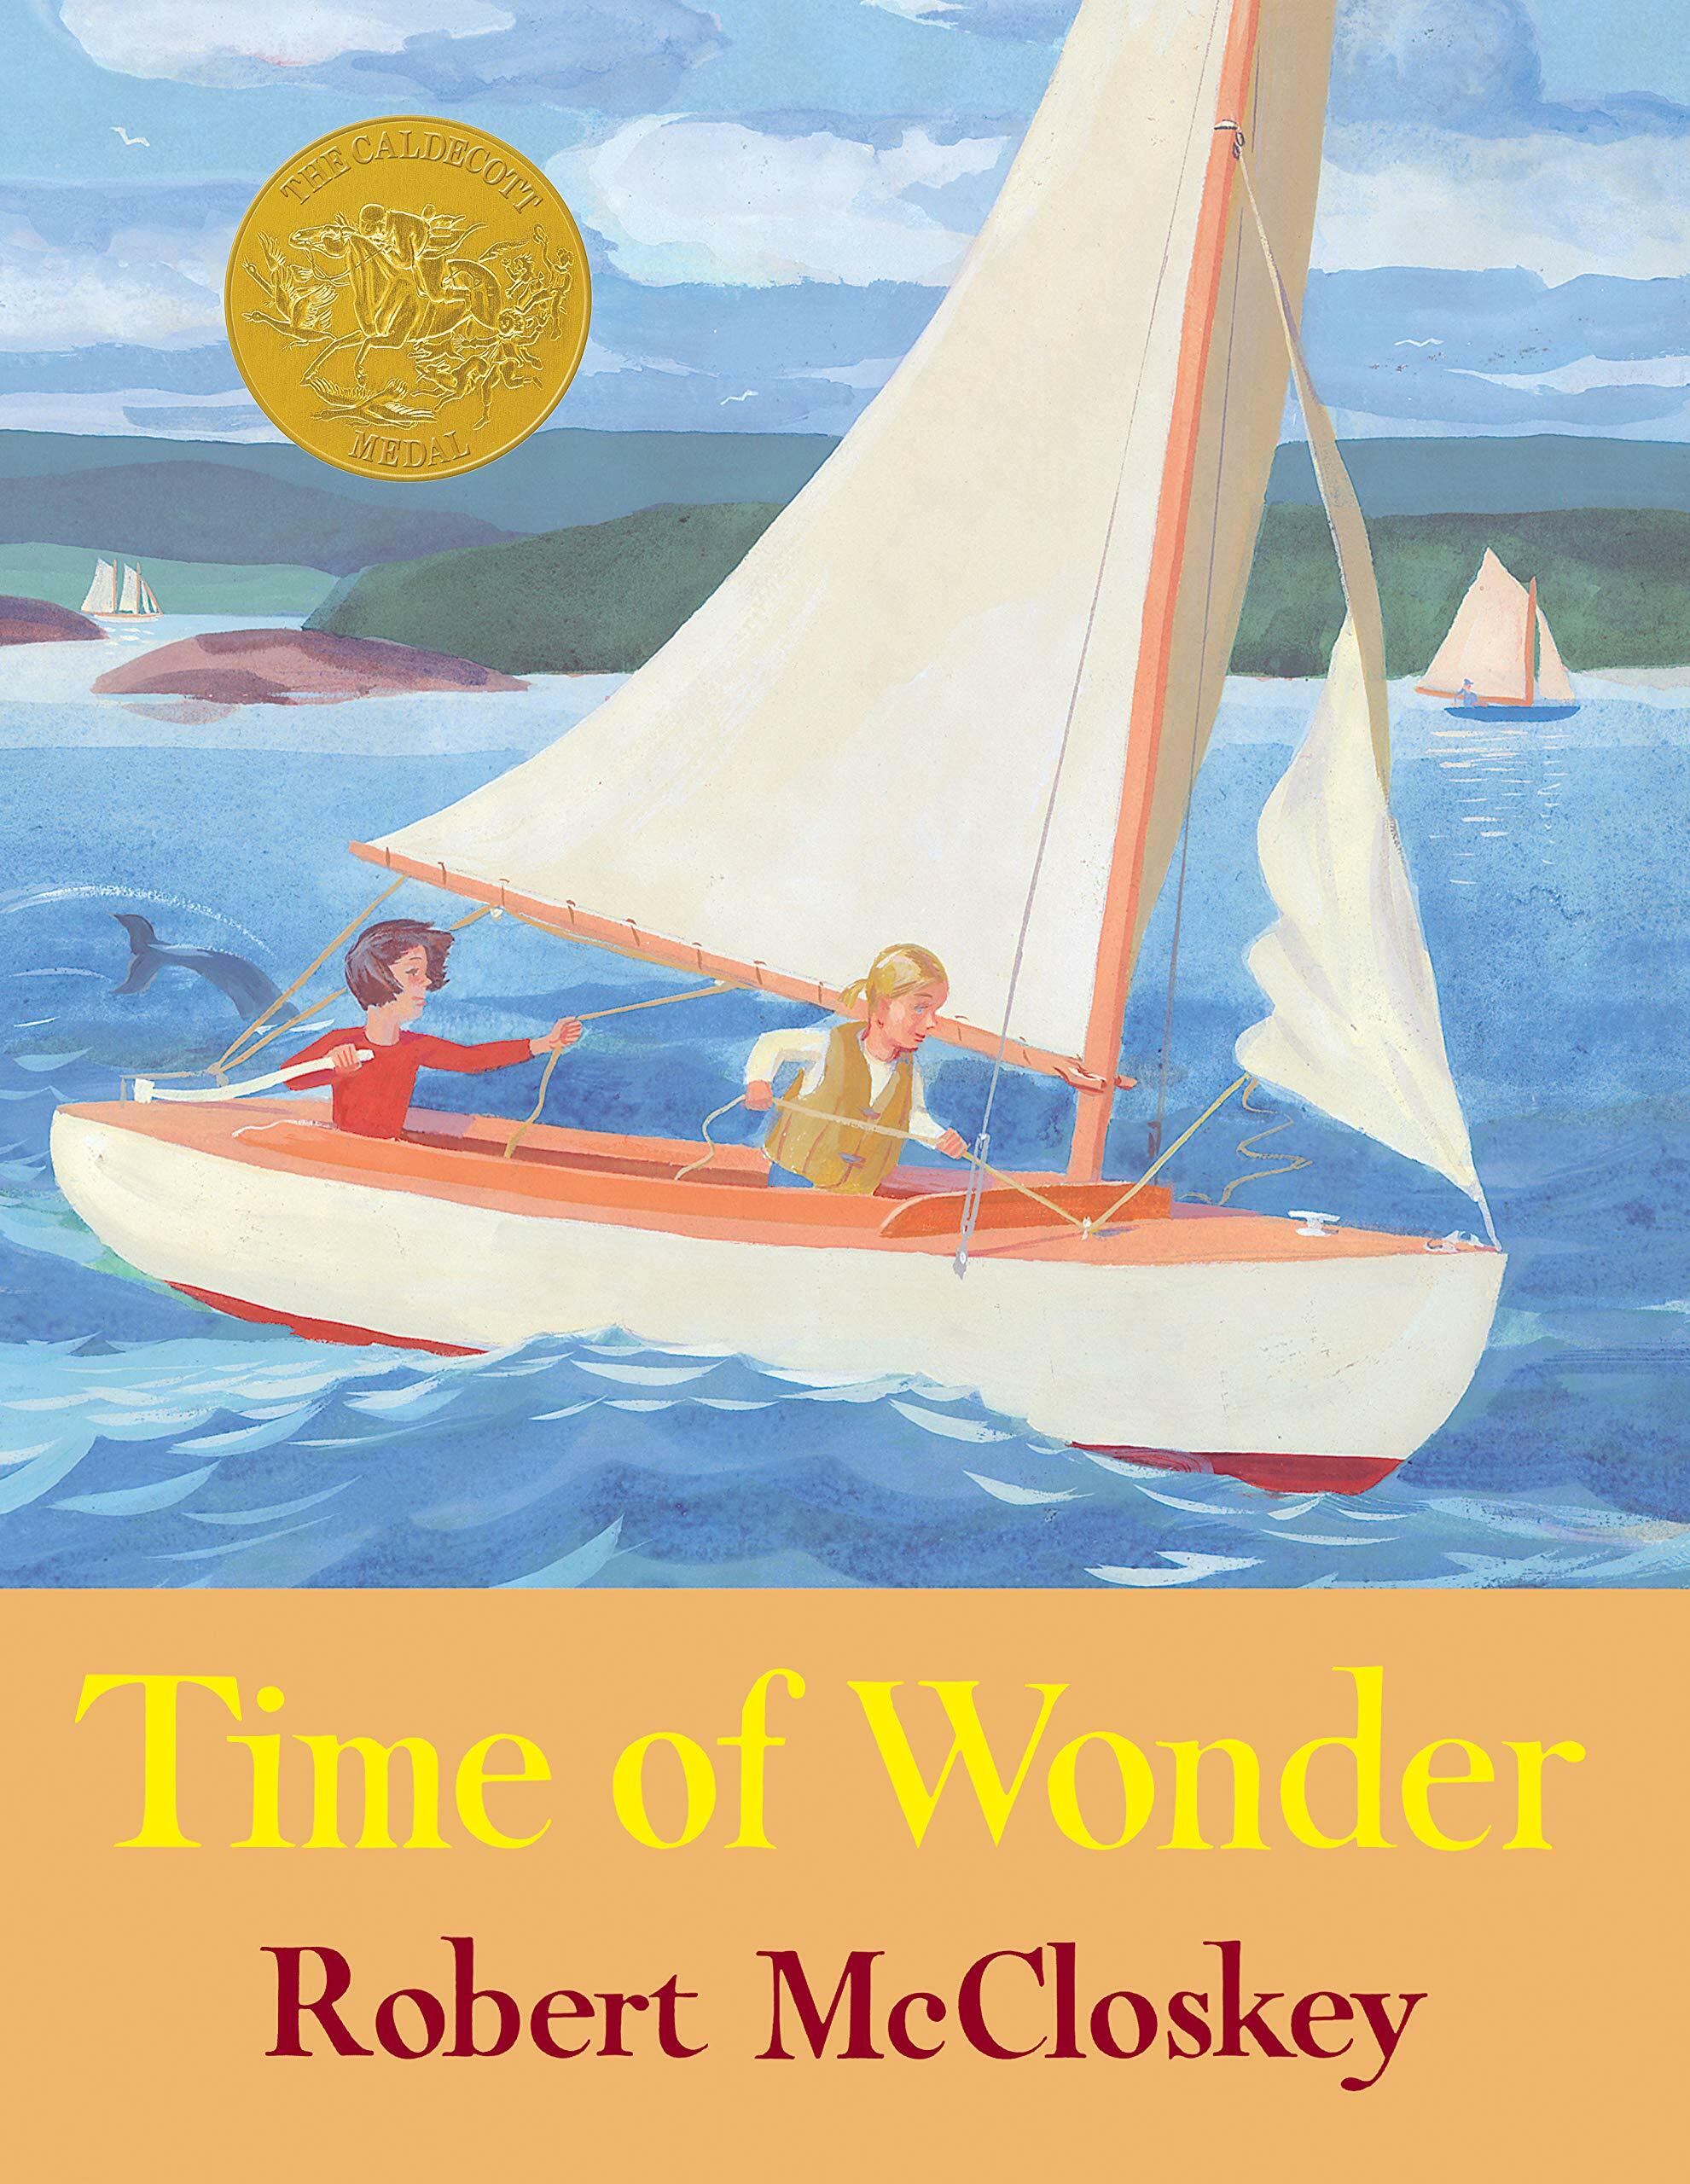 Time of Wonder (Hardcover)